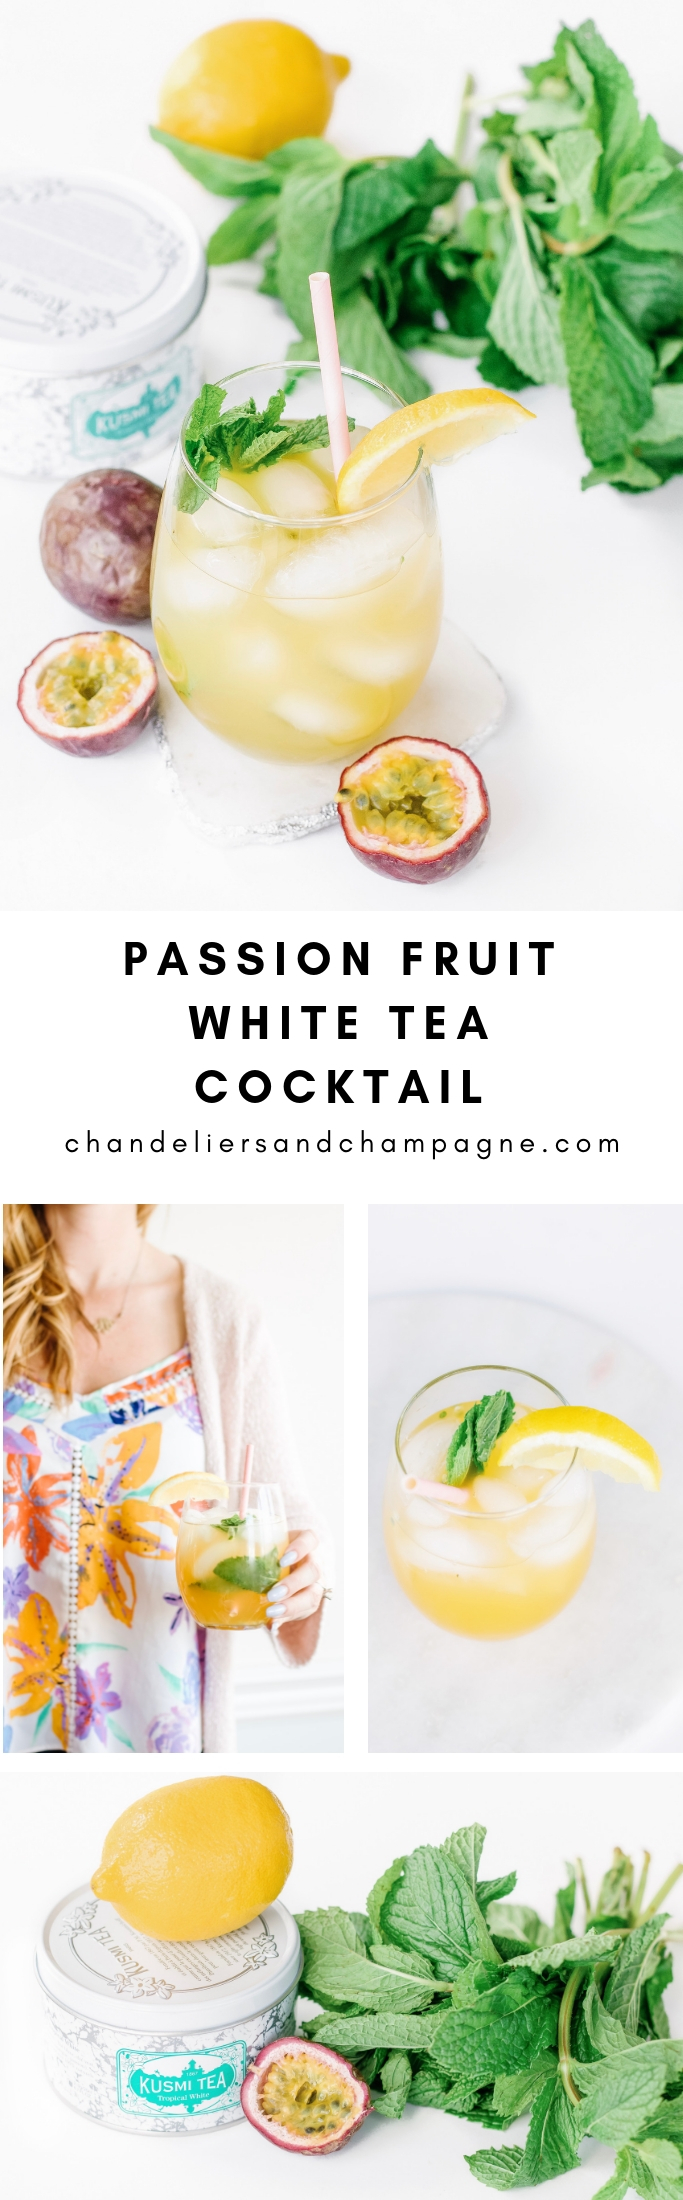 Passion Fruit White Tea Cocktail using Kusmi Tea Tropical White tea, fresh passionfruit, mint and lemon